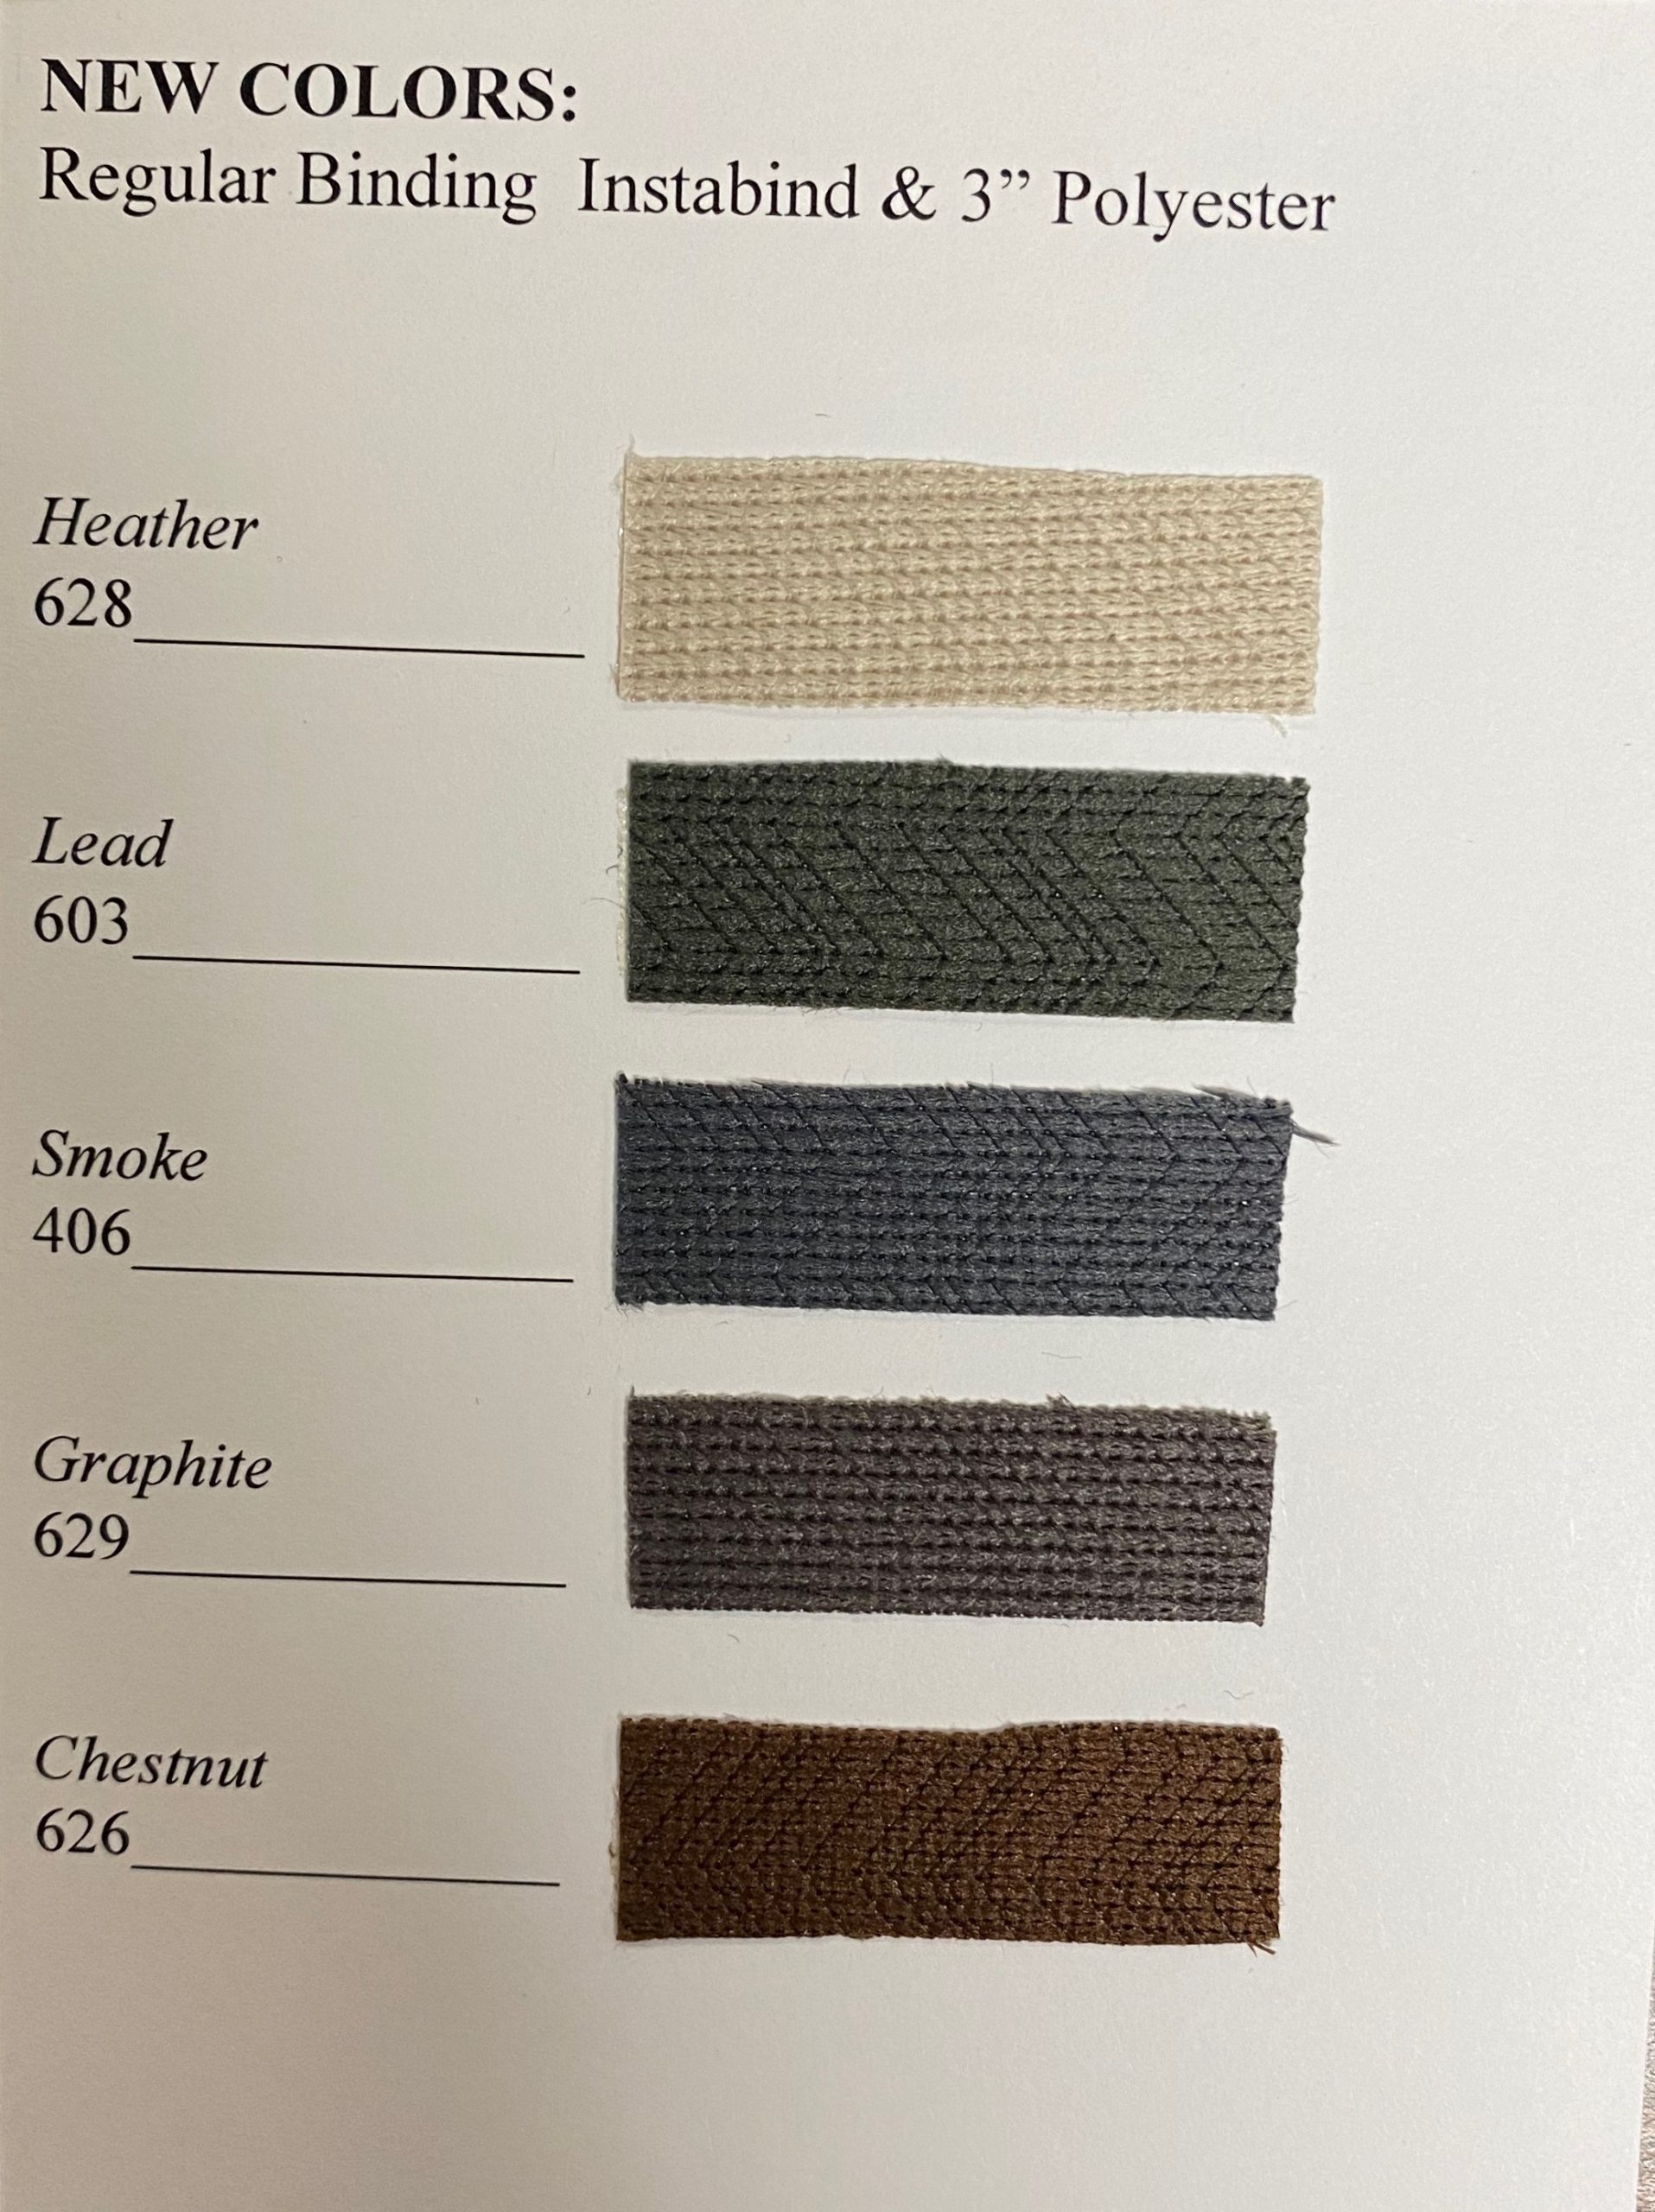 Instabind Regular Carpet Binding (Graphite)